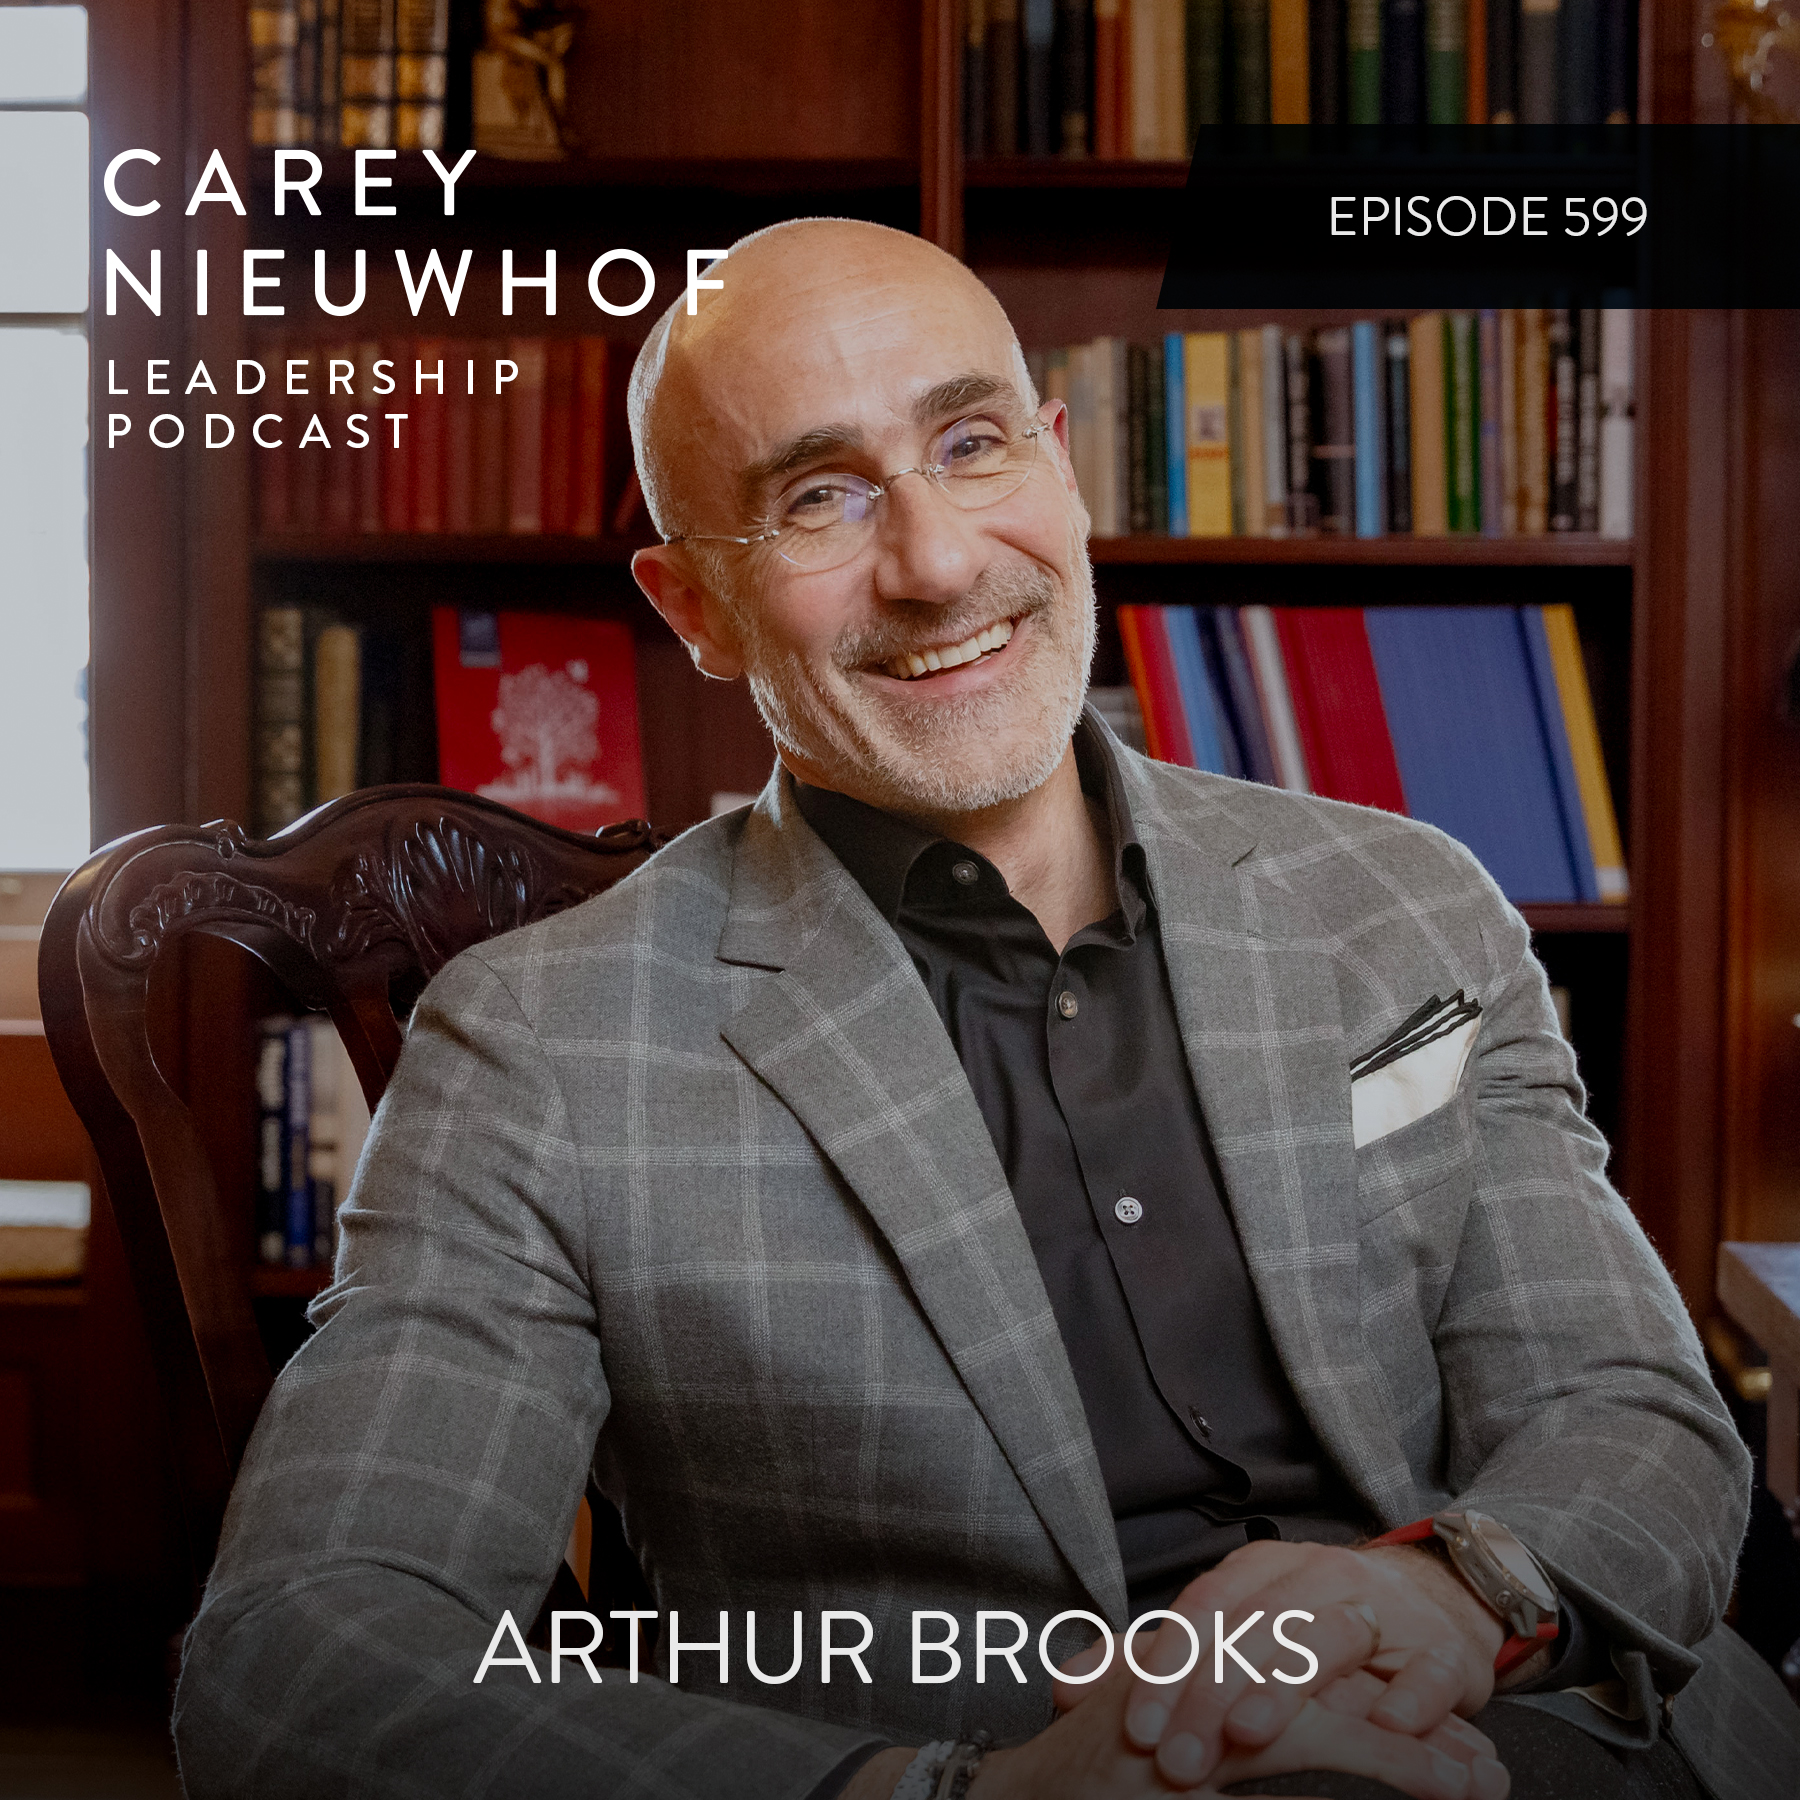 Carey Nieuwhof Podcast: Episode 599: Arthur Brooks